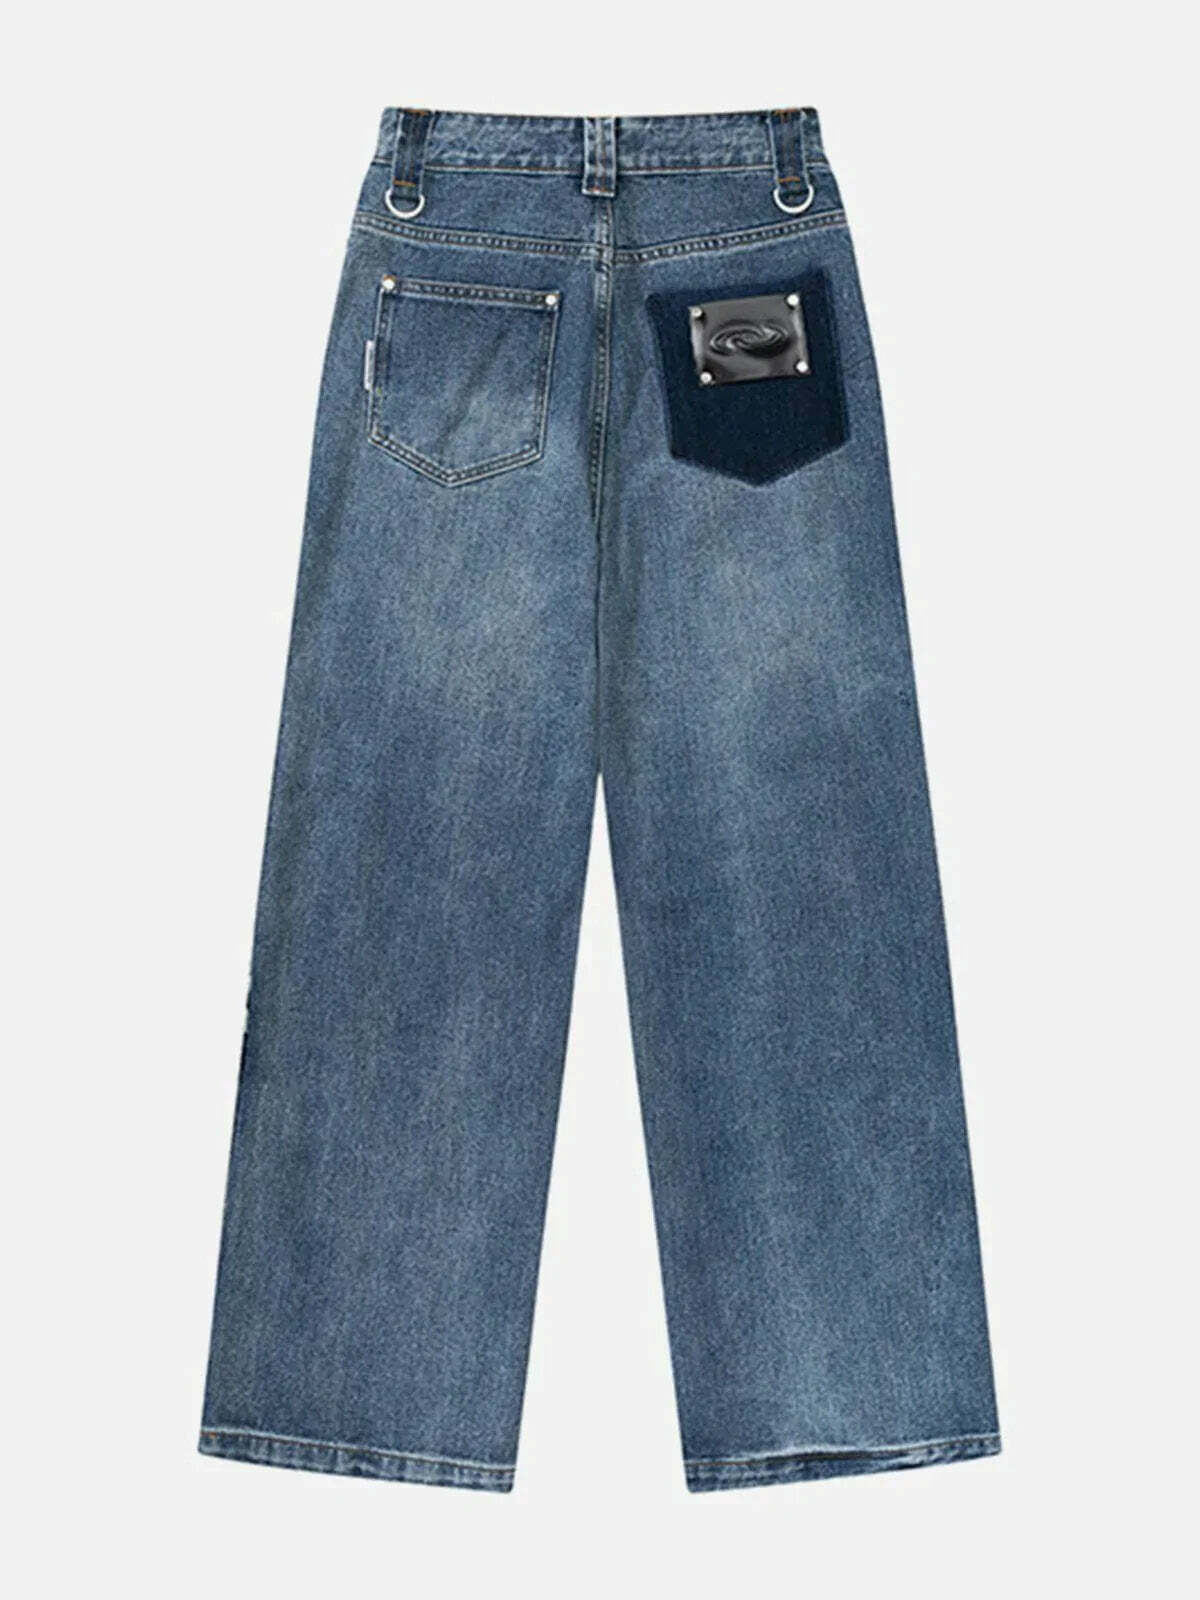 multipocket raw edge jeans edgy denim essential 8885